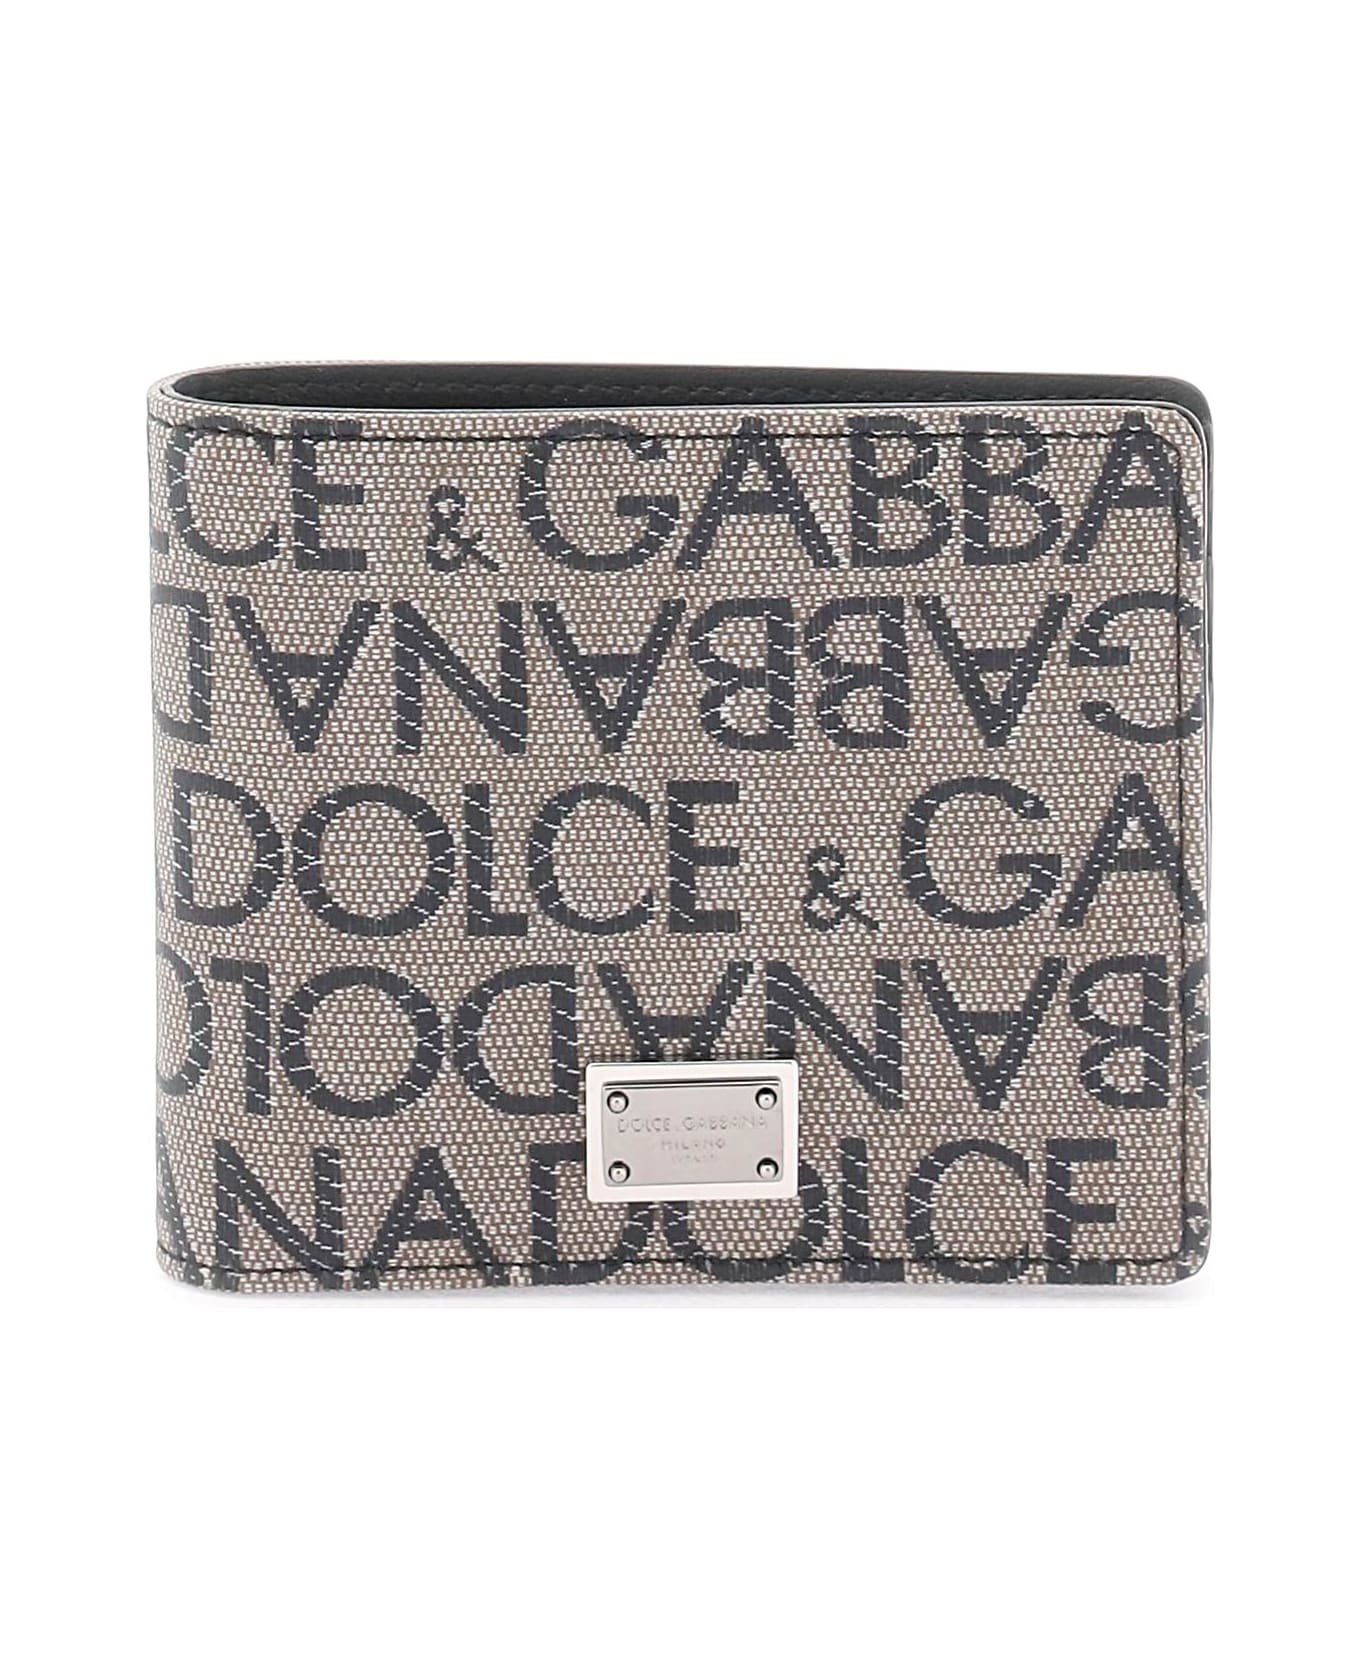 Dolce & Gabbana Jacquard Wallet - Brown / Black